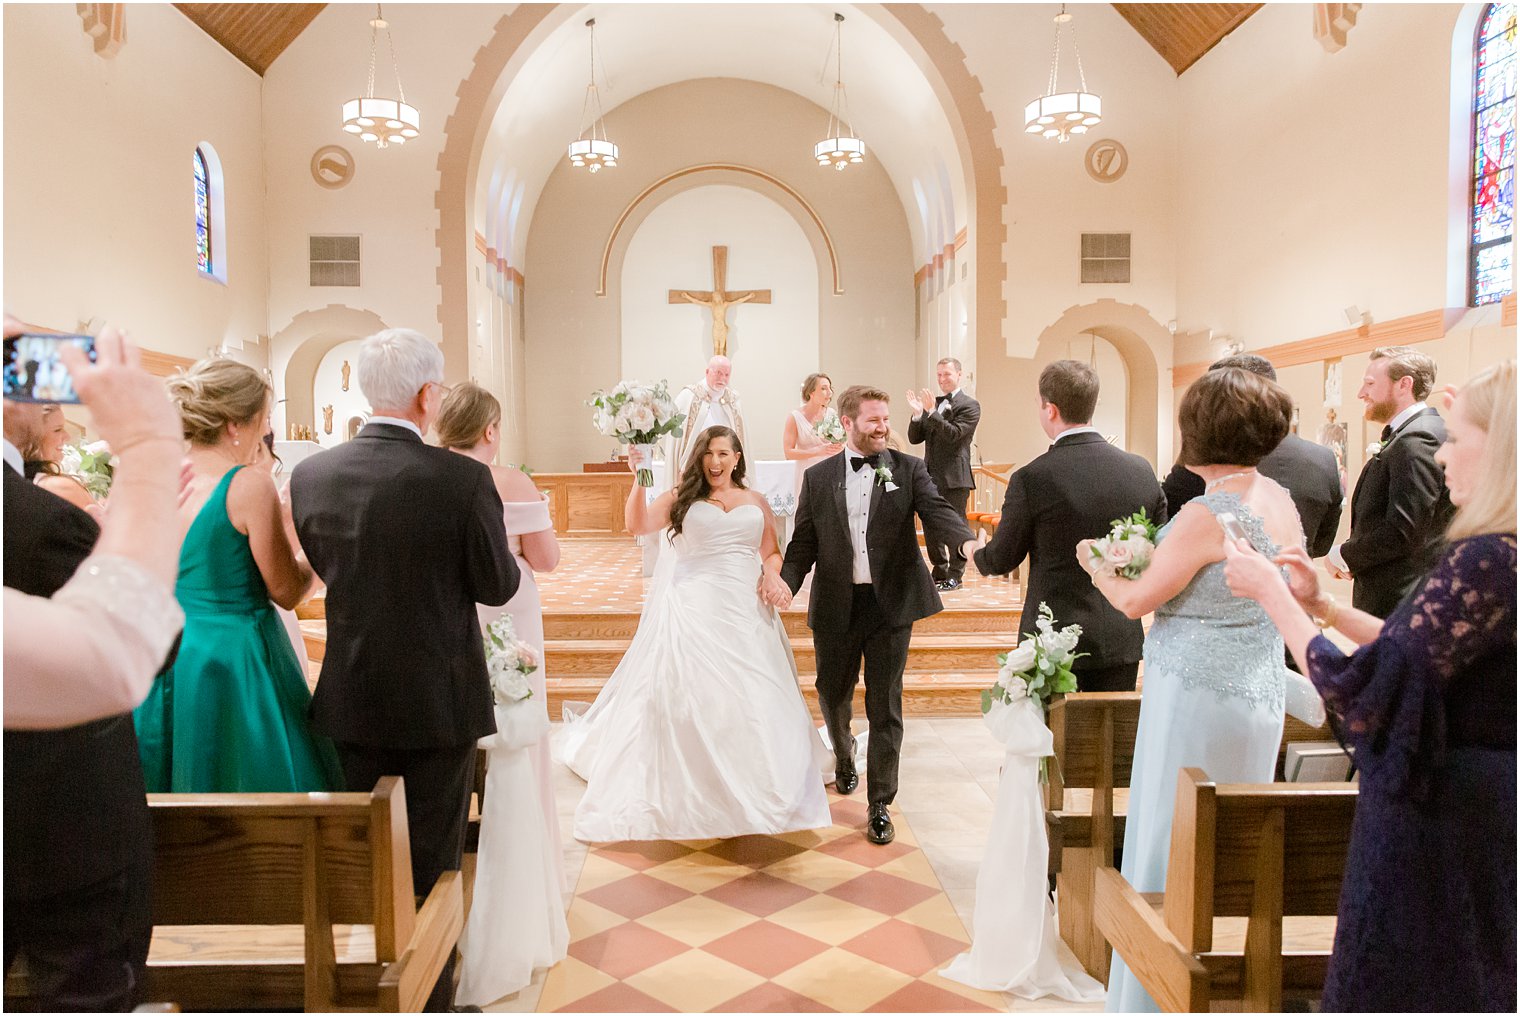 Bride and groom walking down the aisle in St. Luke's Church in Ho-Ho-Kus